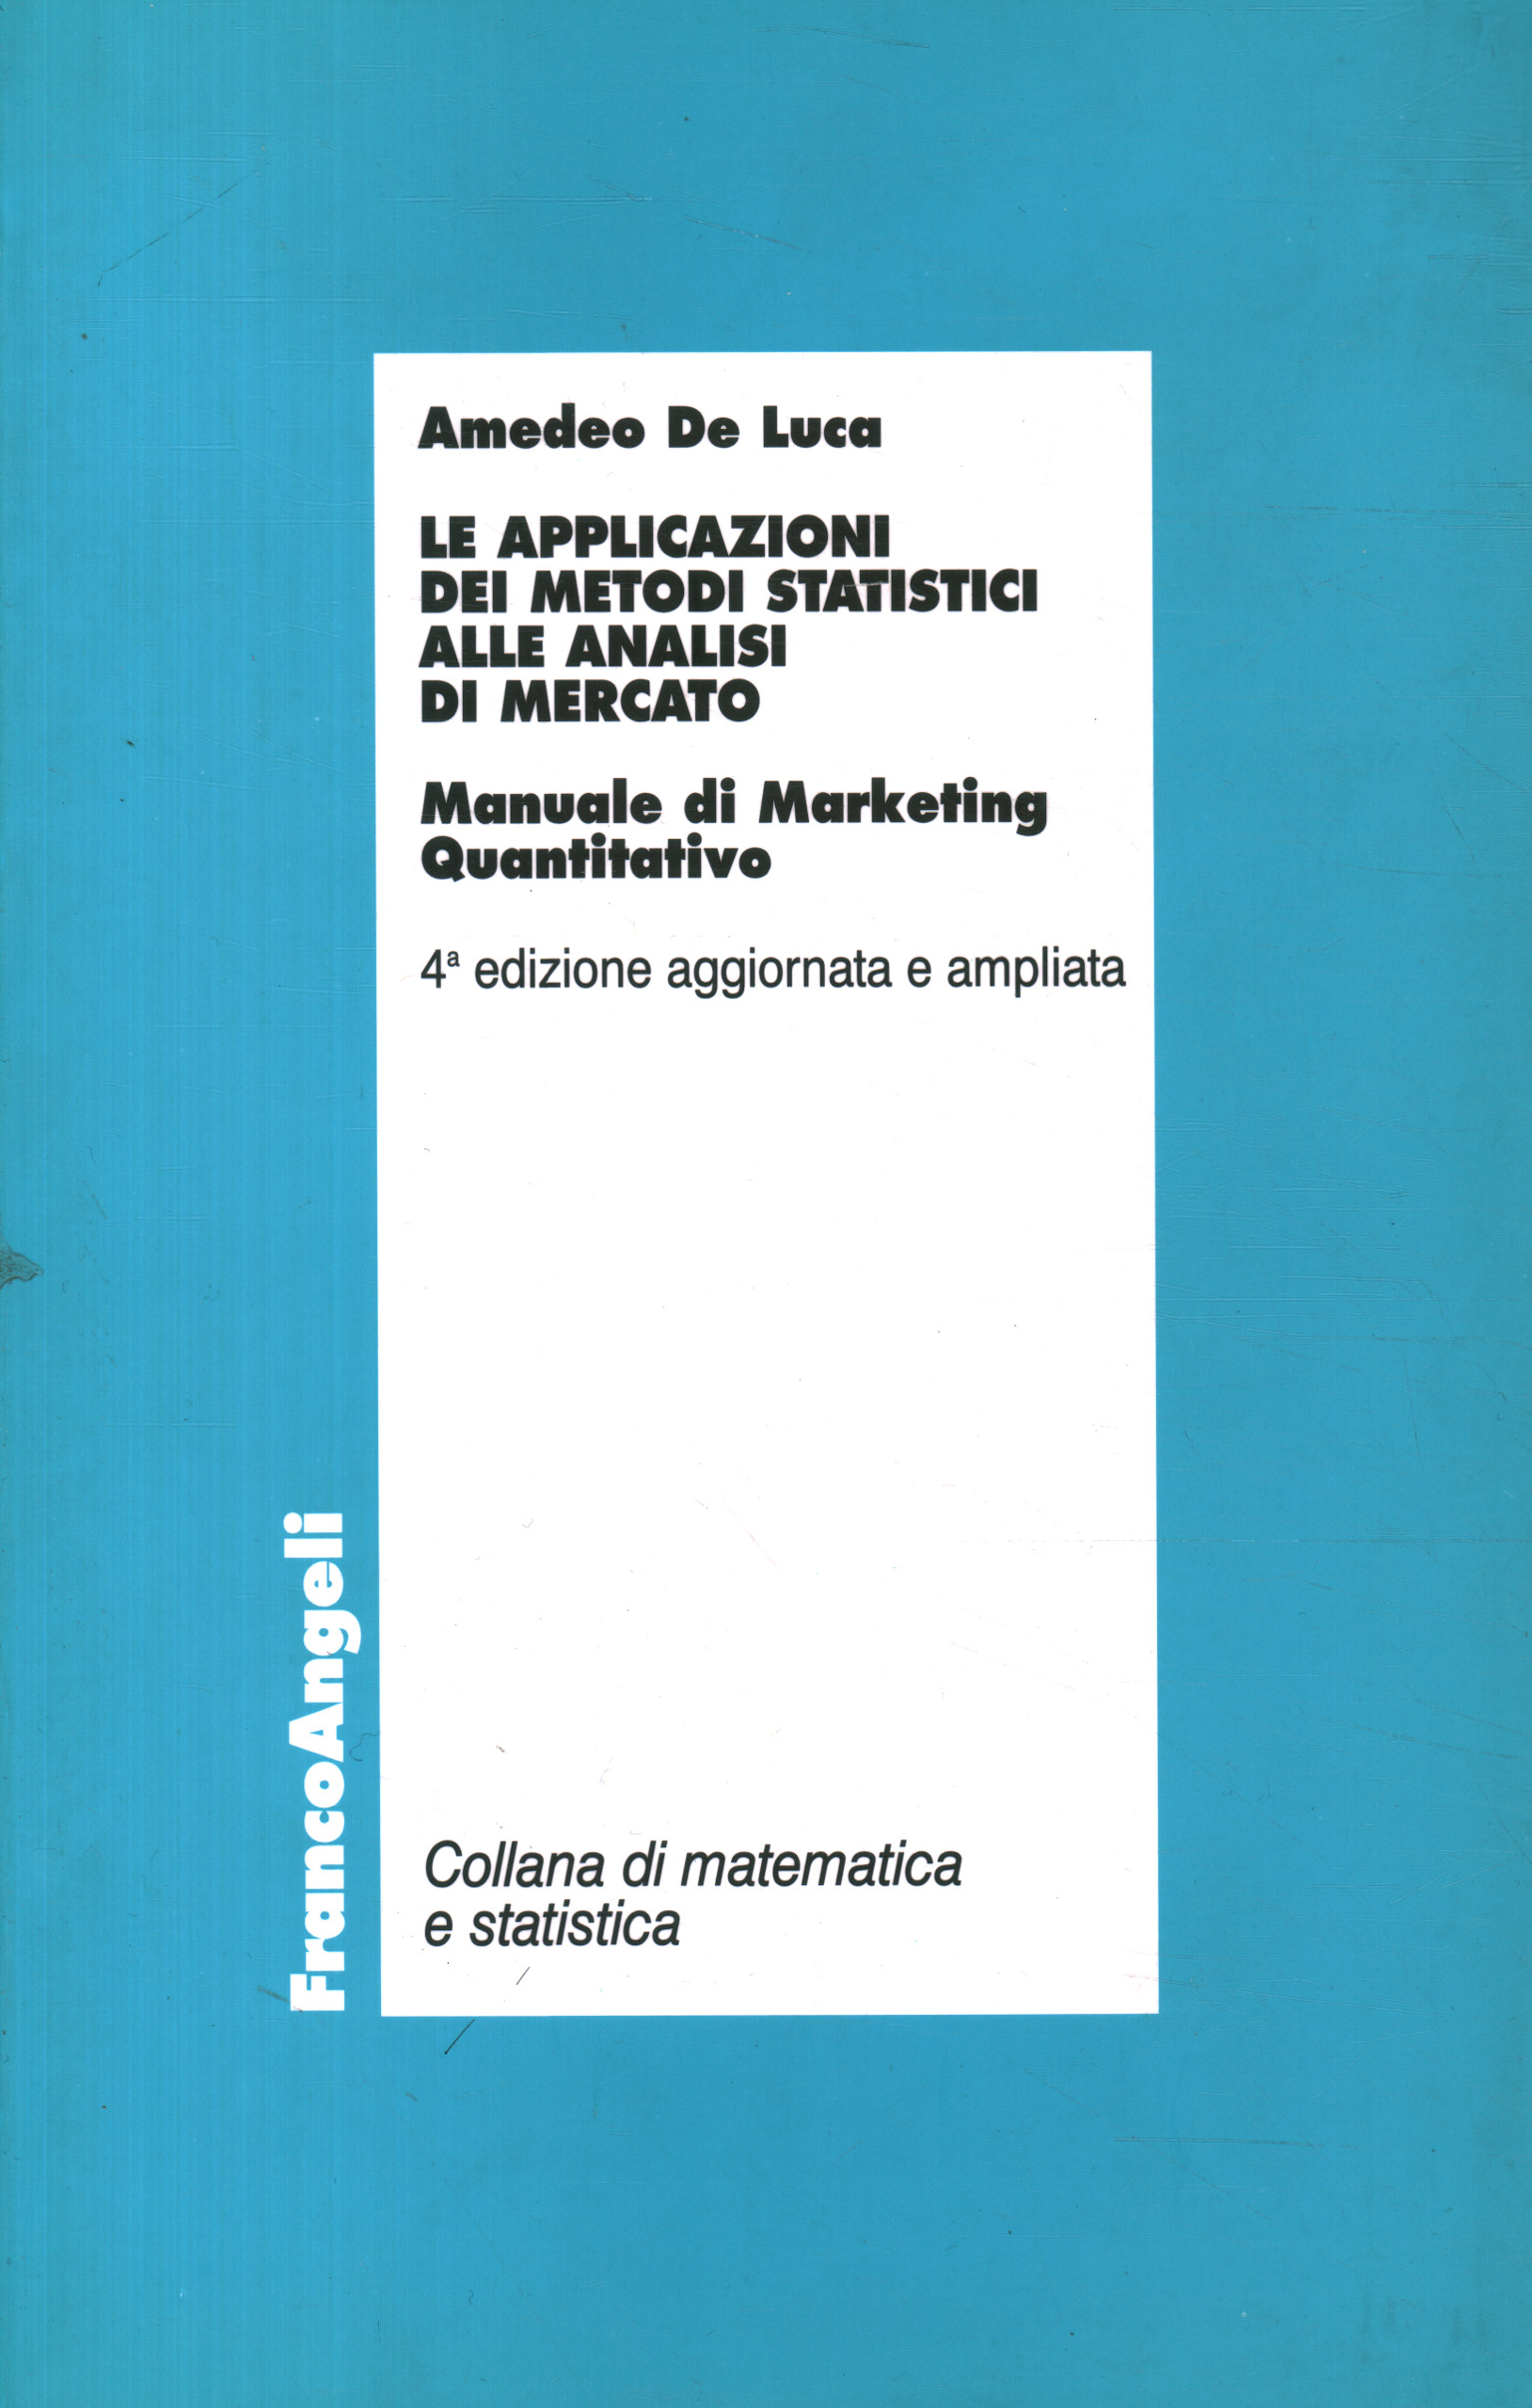 Applications of statistical methods al